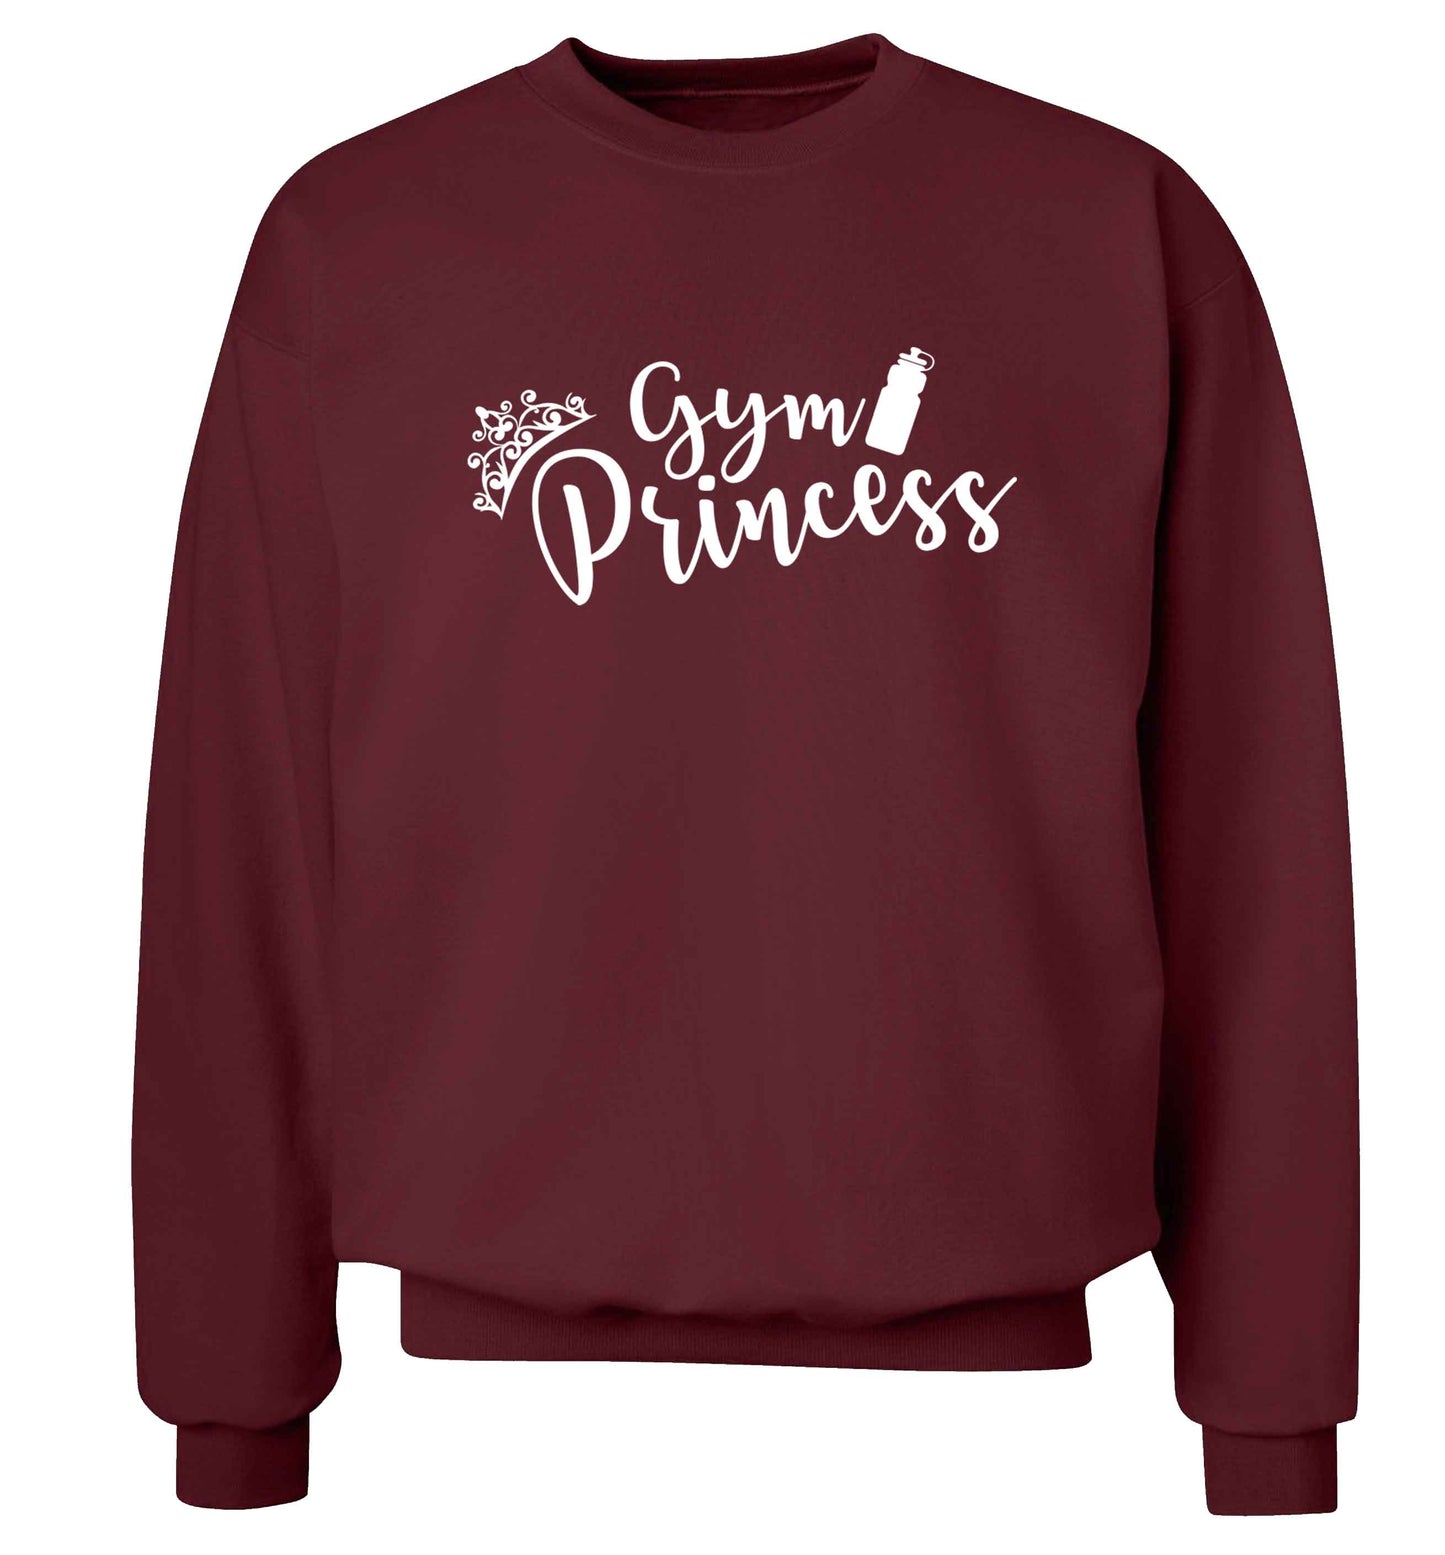 Gym princess Adult's unisex maroon Sweater 2XL